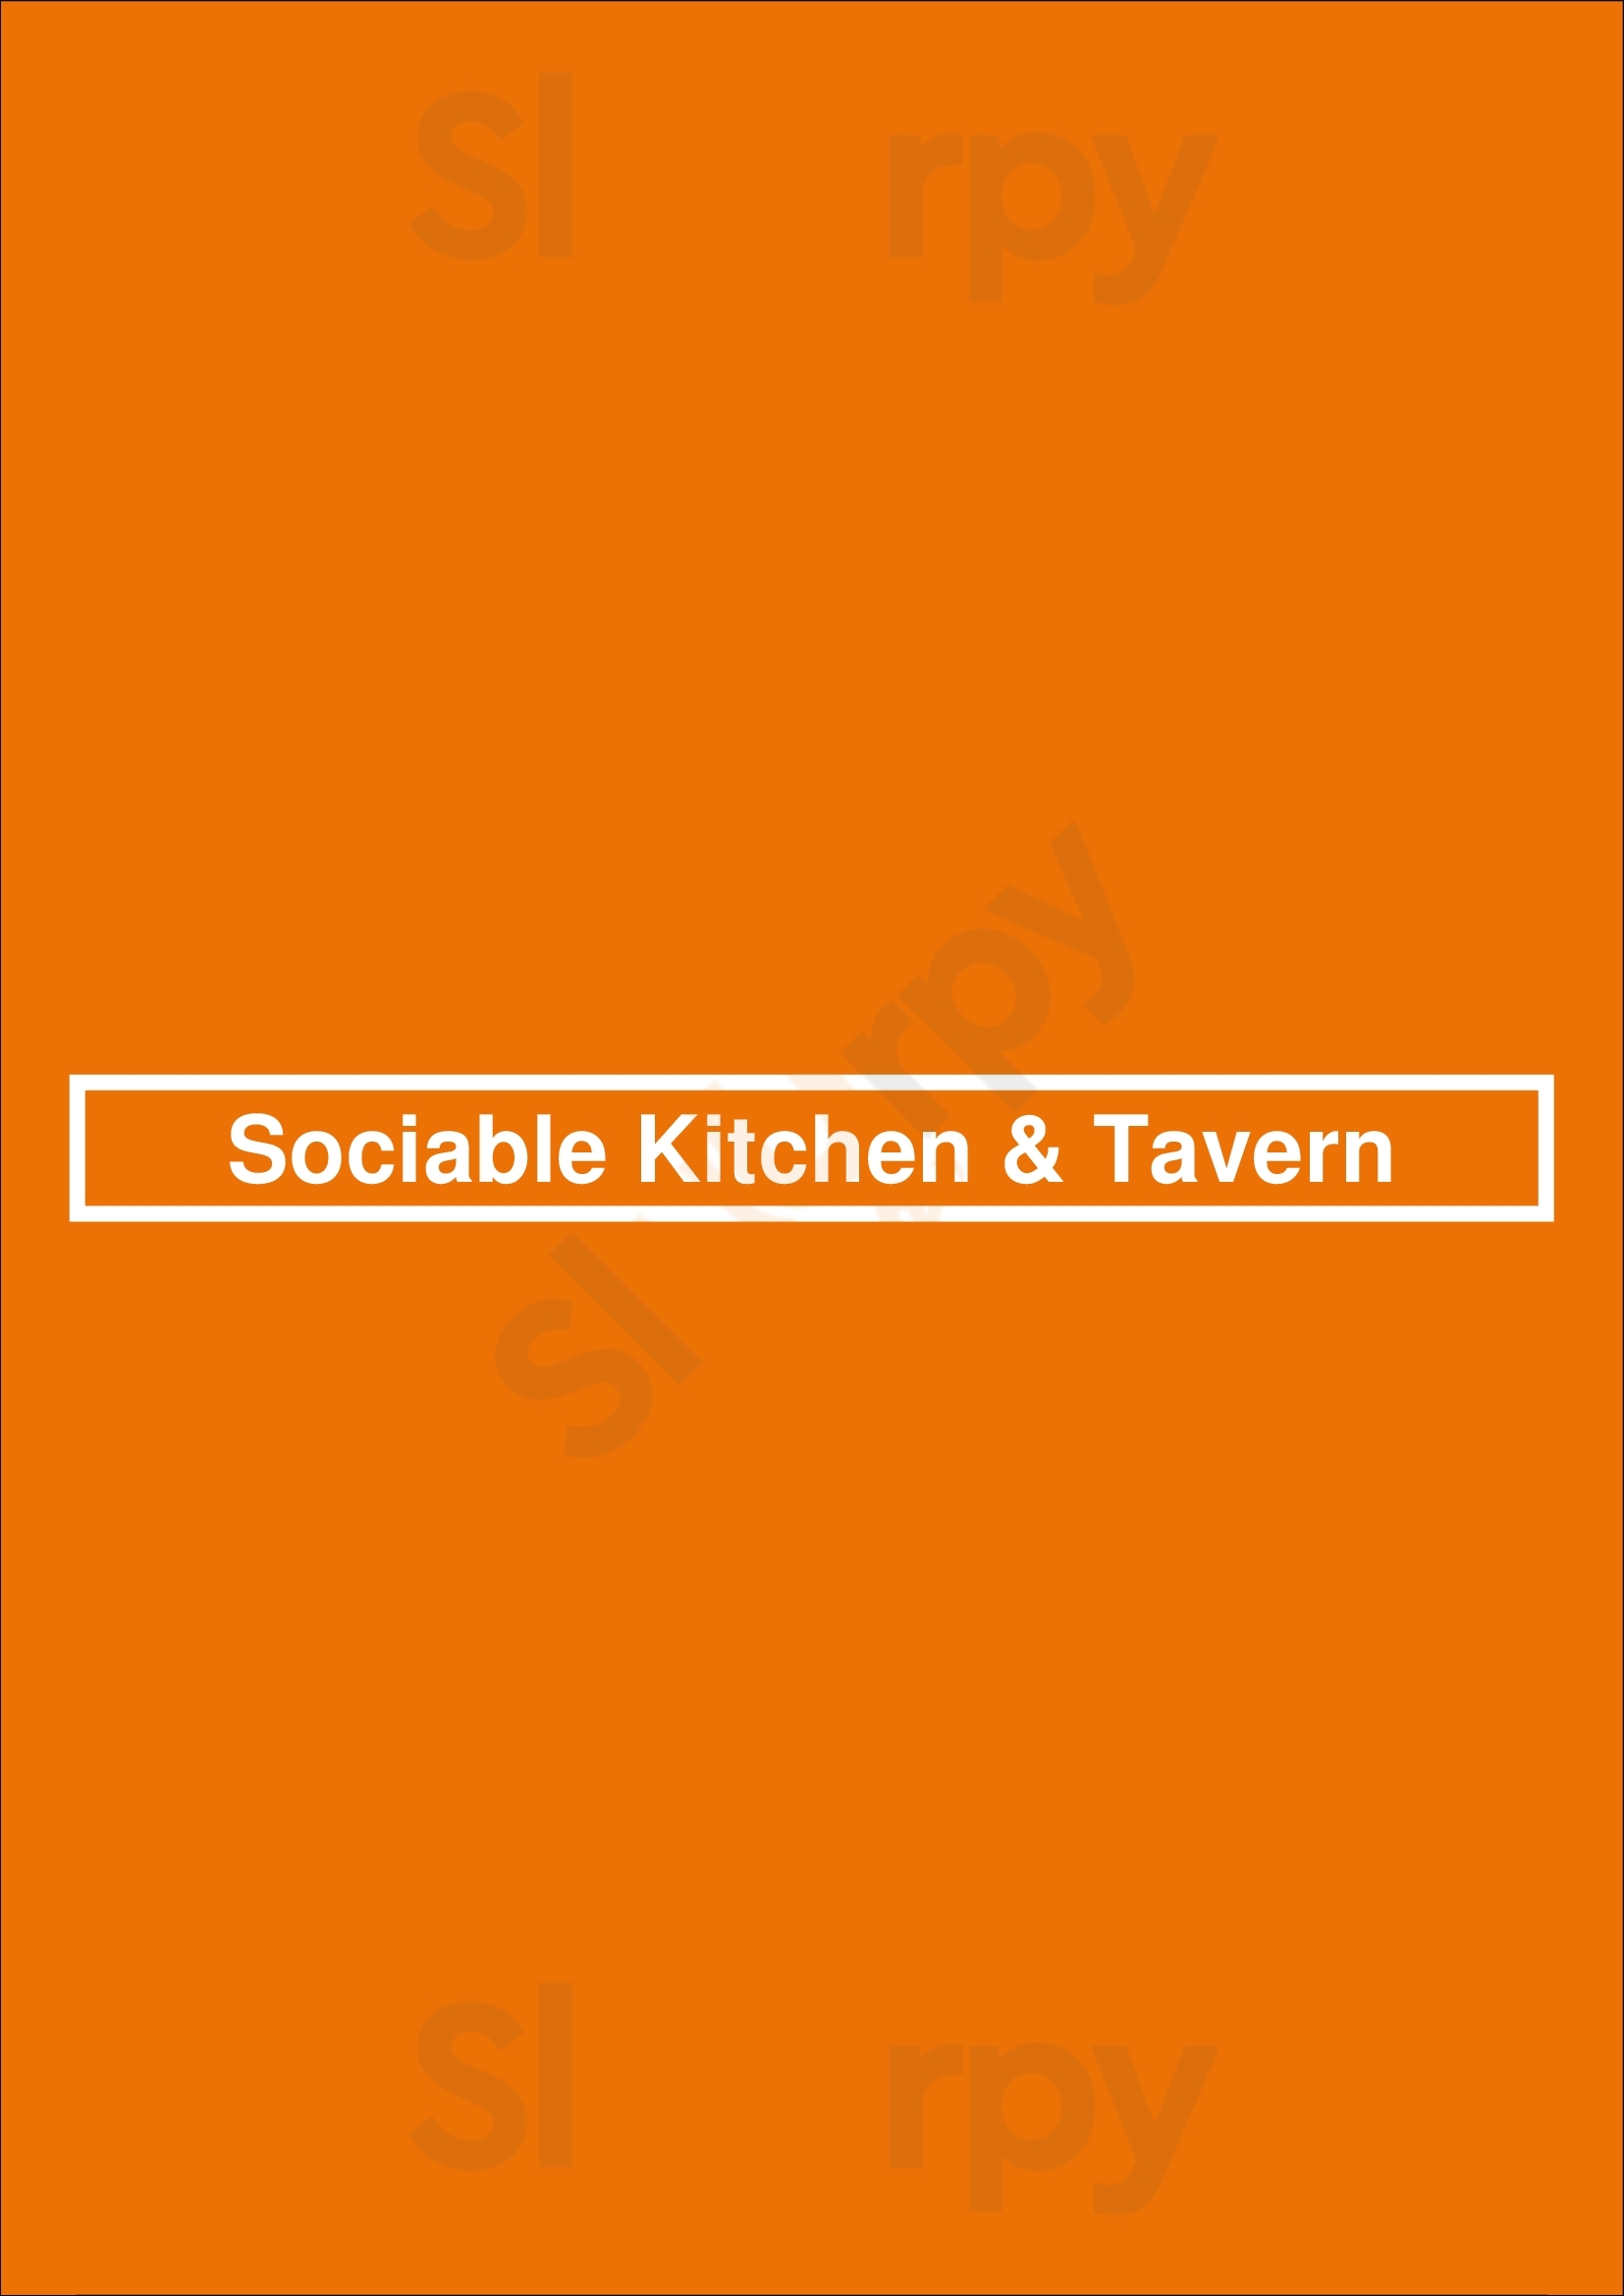 Sociable Kitchen & Tavern Brantford Menu - 1